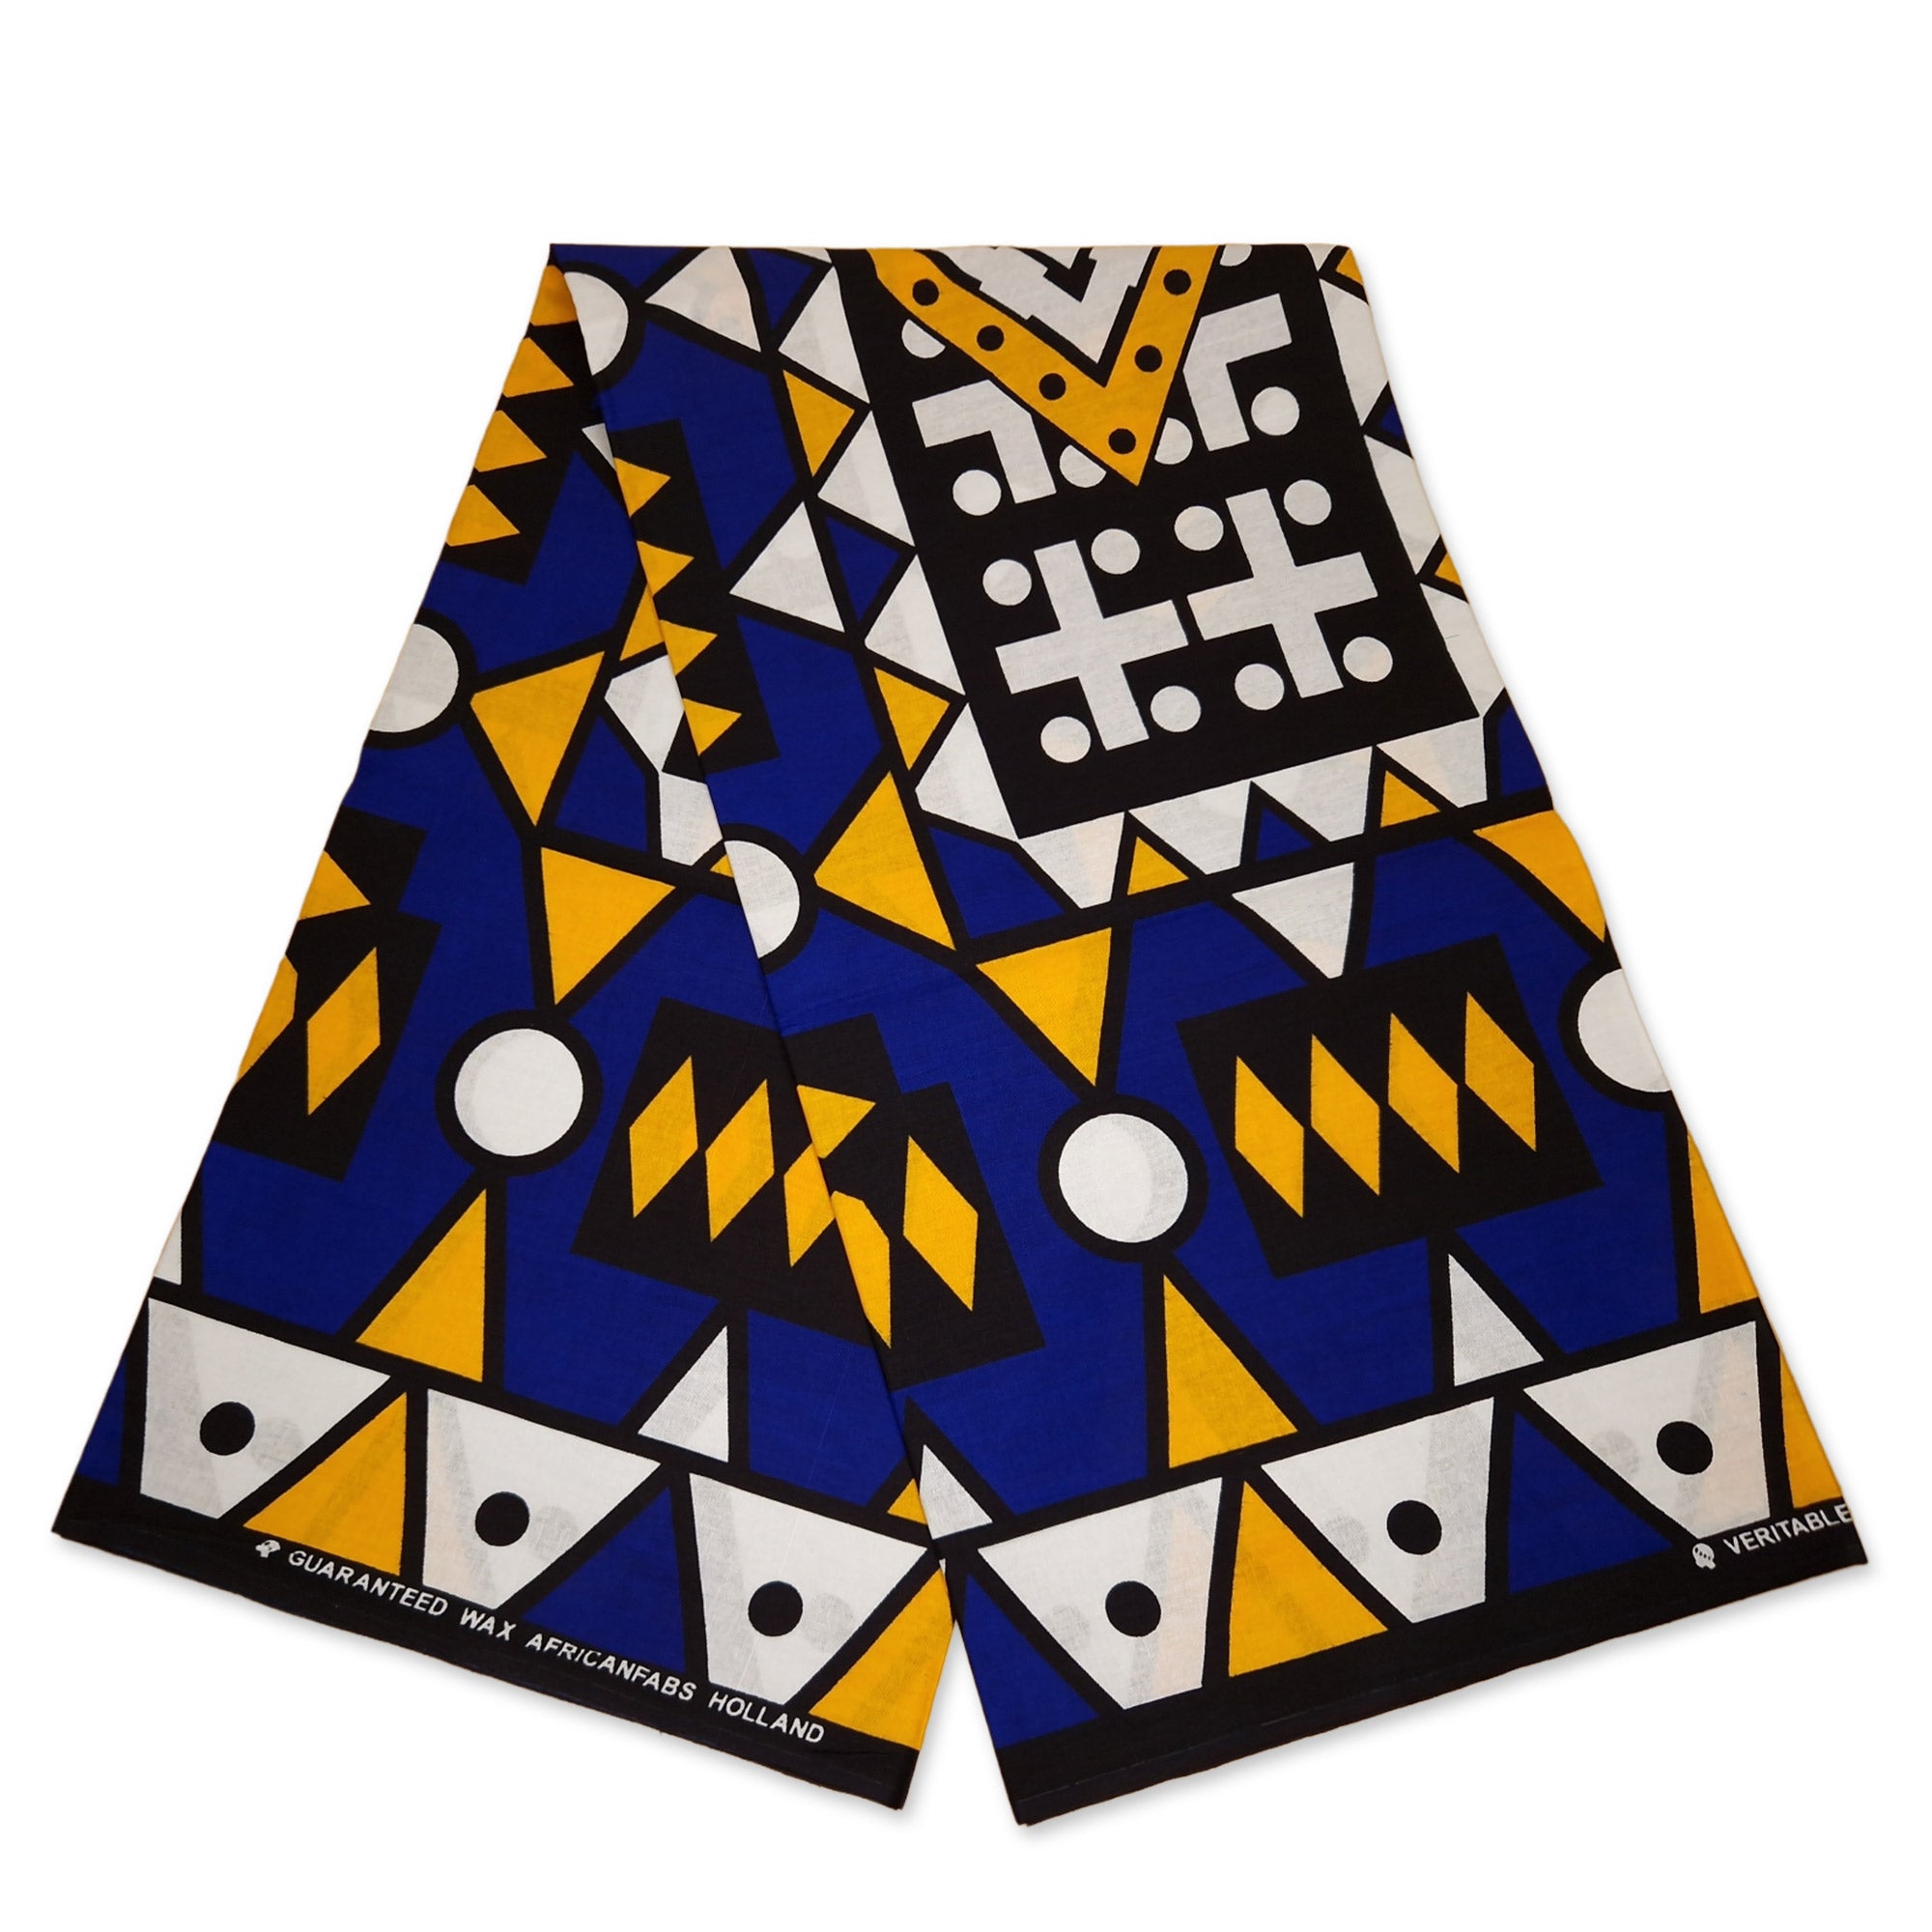 Afrikanischer Print Stoff - Blau Gelb Samakaka / Samacaca (Angola) - 100% Baumwolle